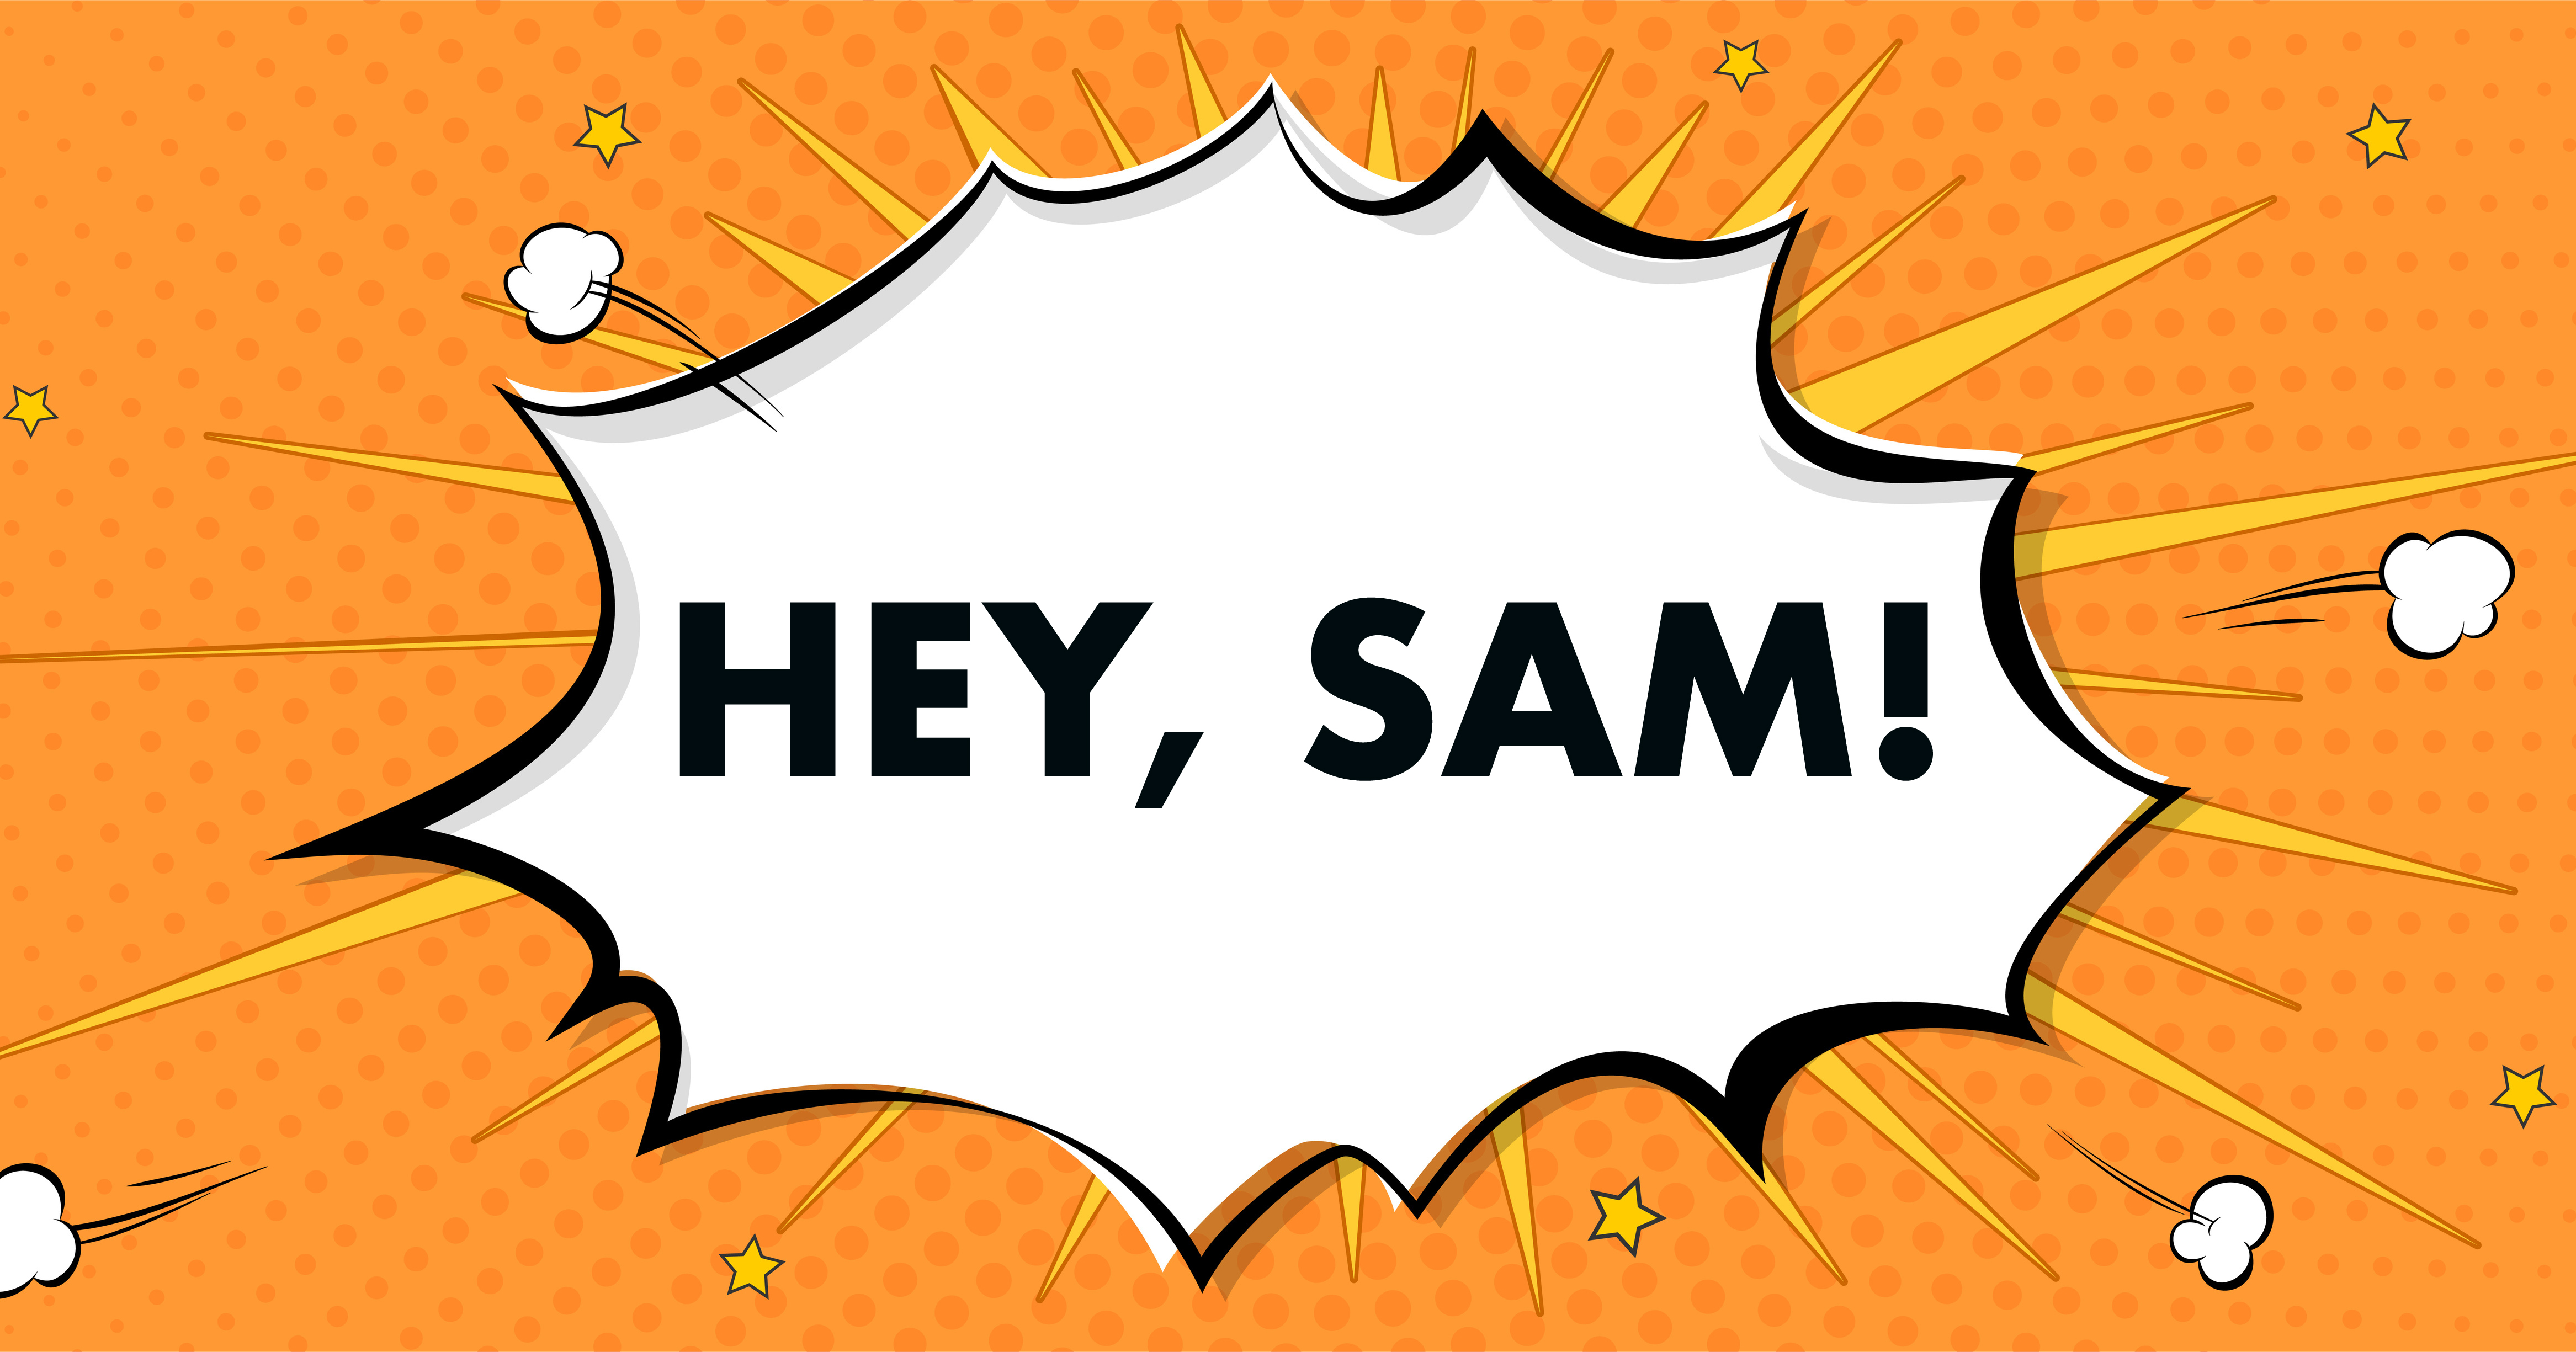 Hey, Sam!